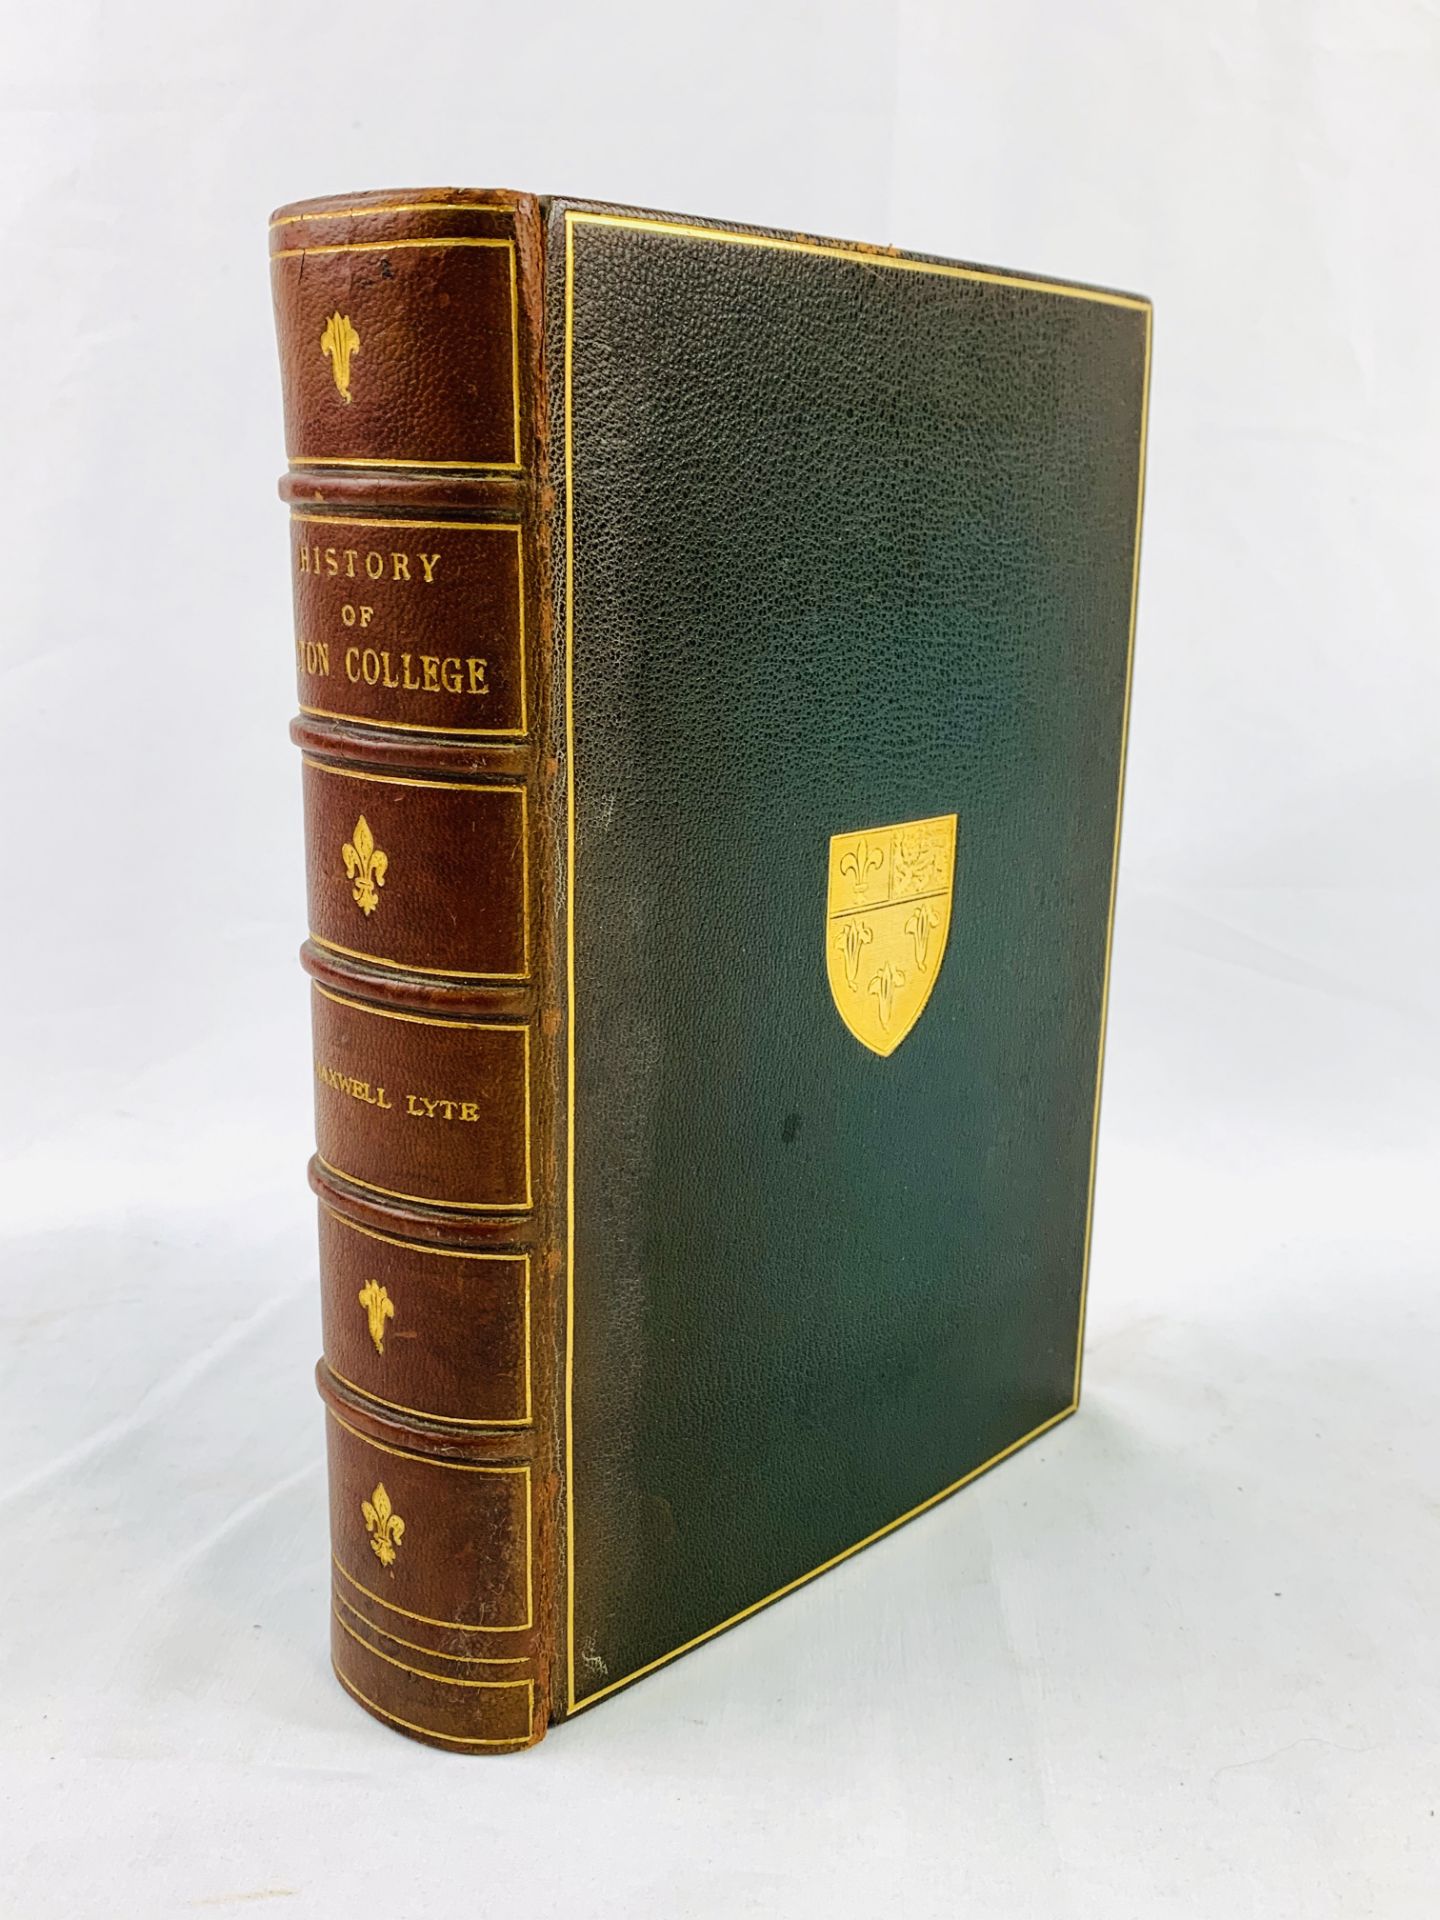 A History of Eton College 1440-1910 by Sir H C Maxwell Lyte, pub. Macmillan & Co., 1911.